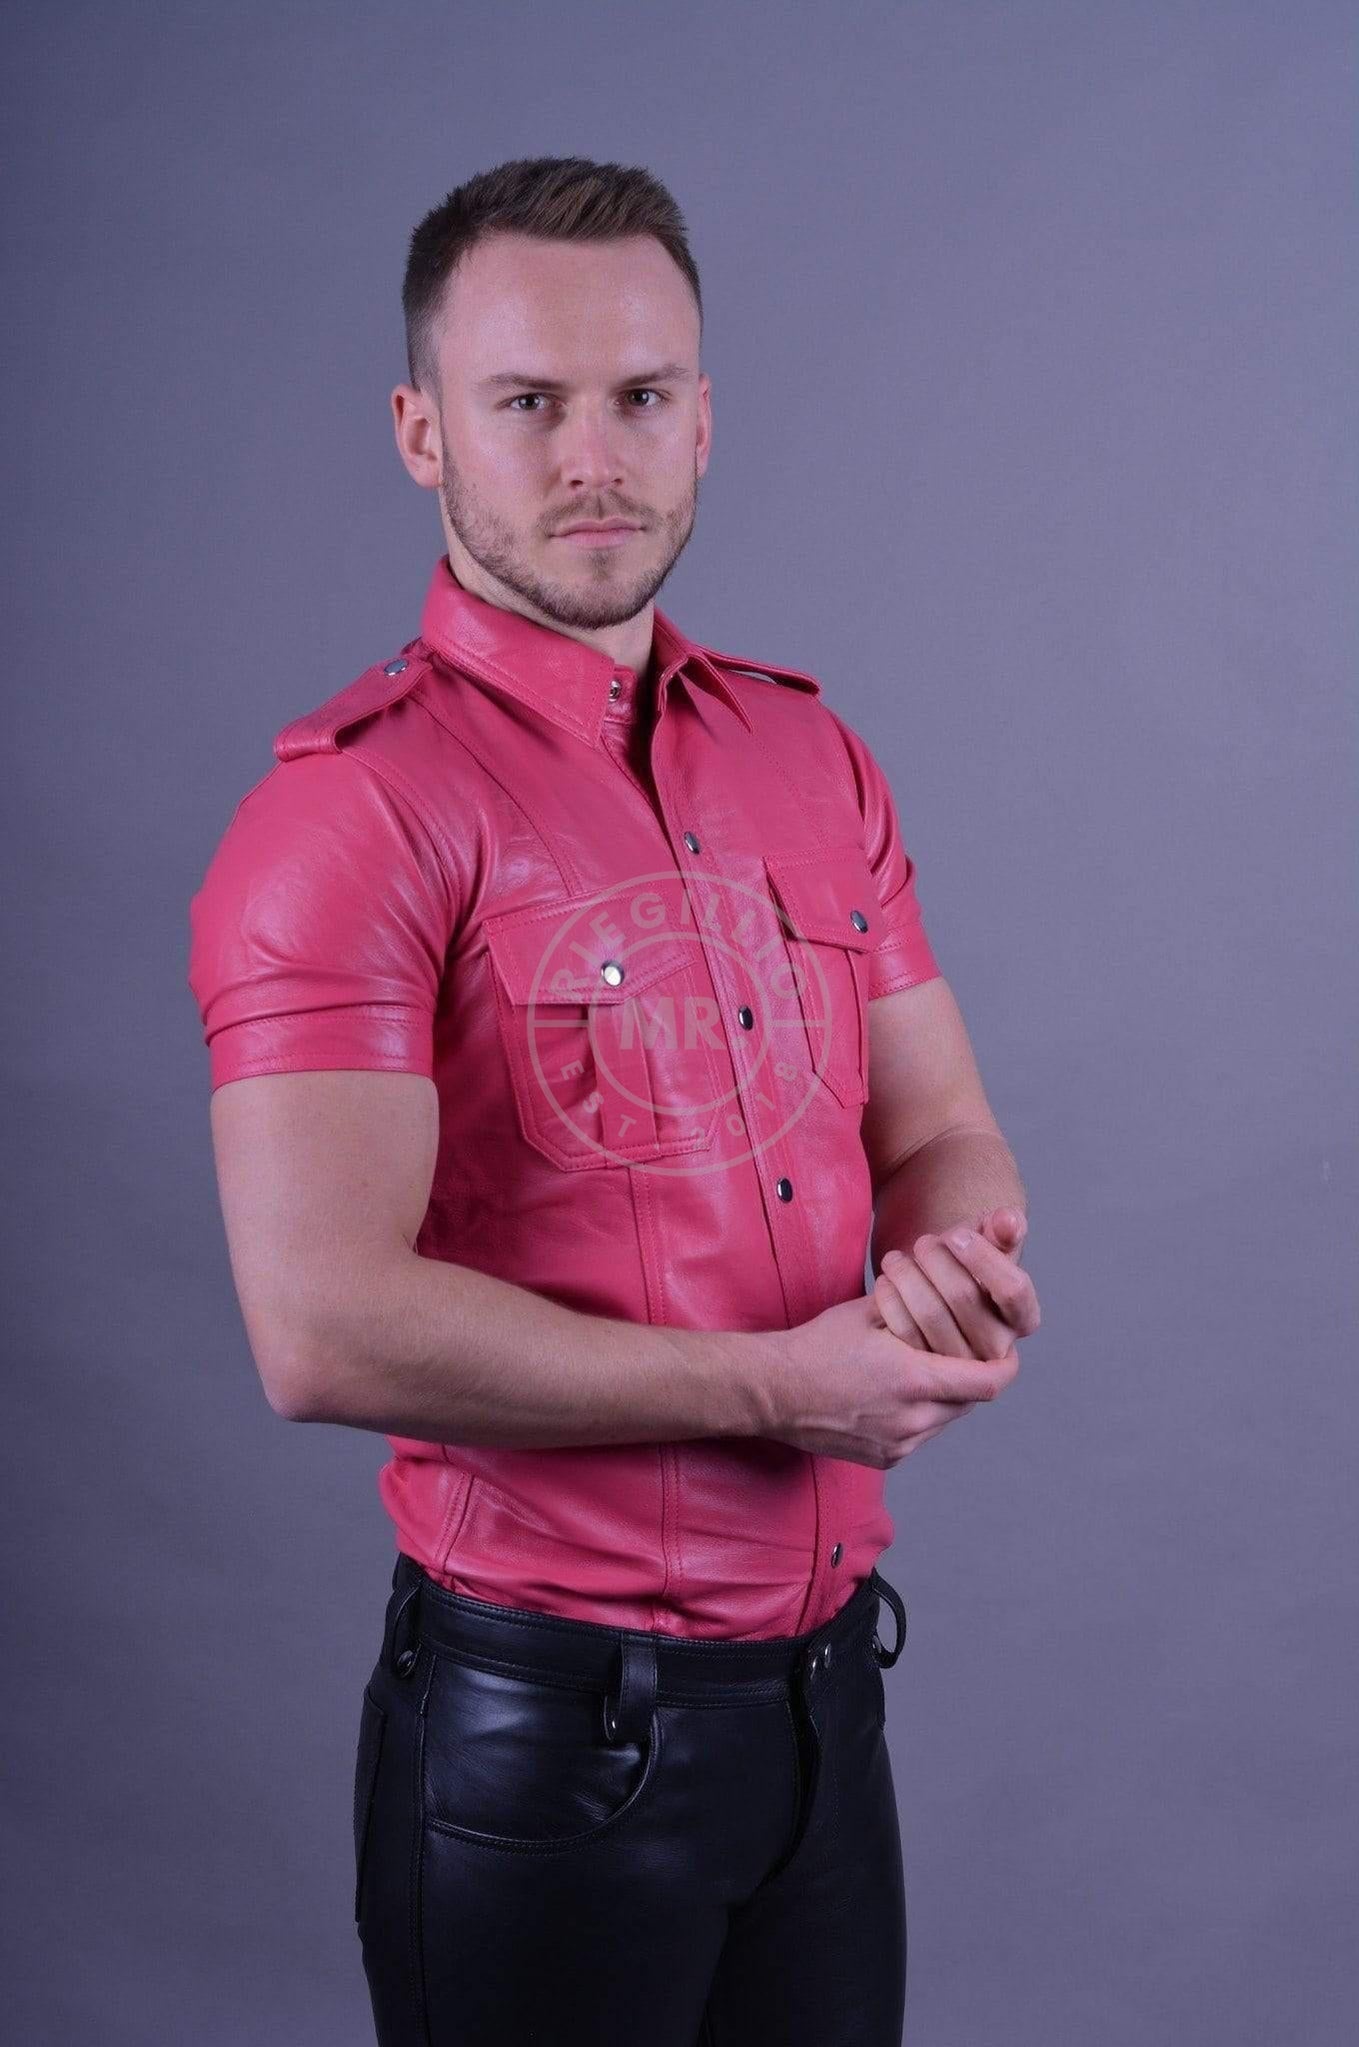 Pink Leather Shirt at MR. Riegillio